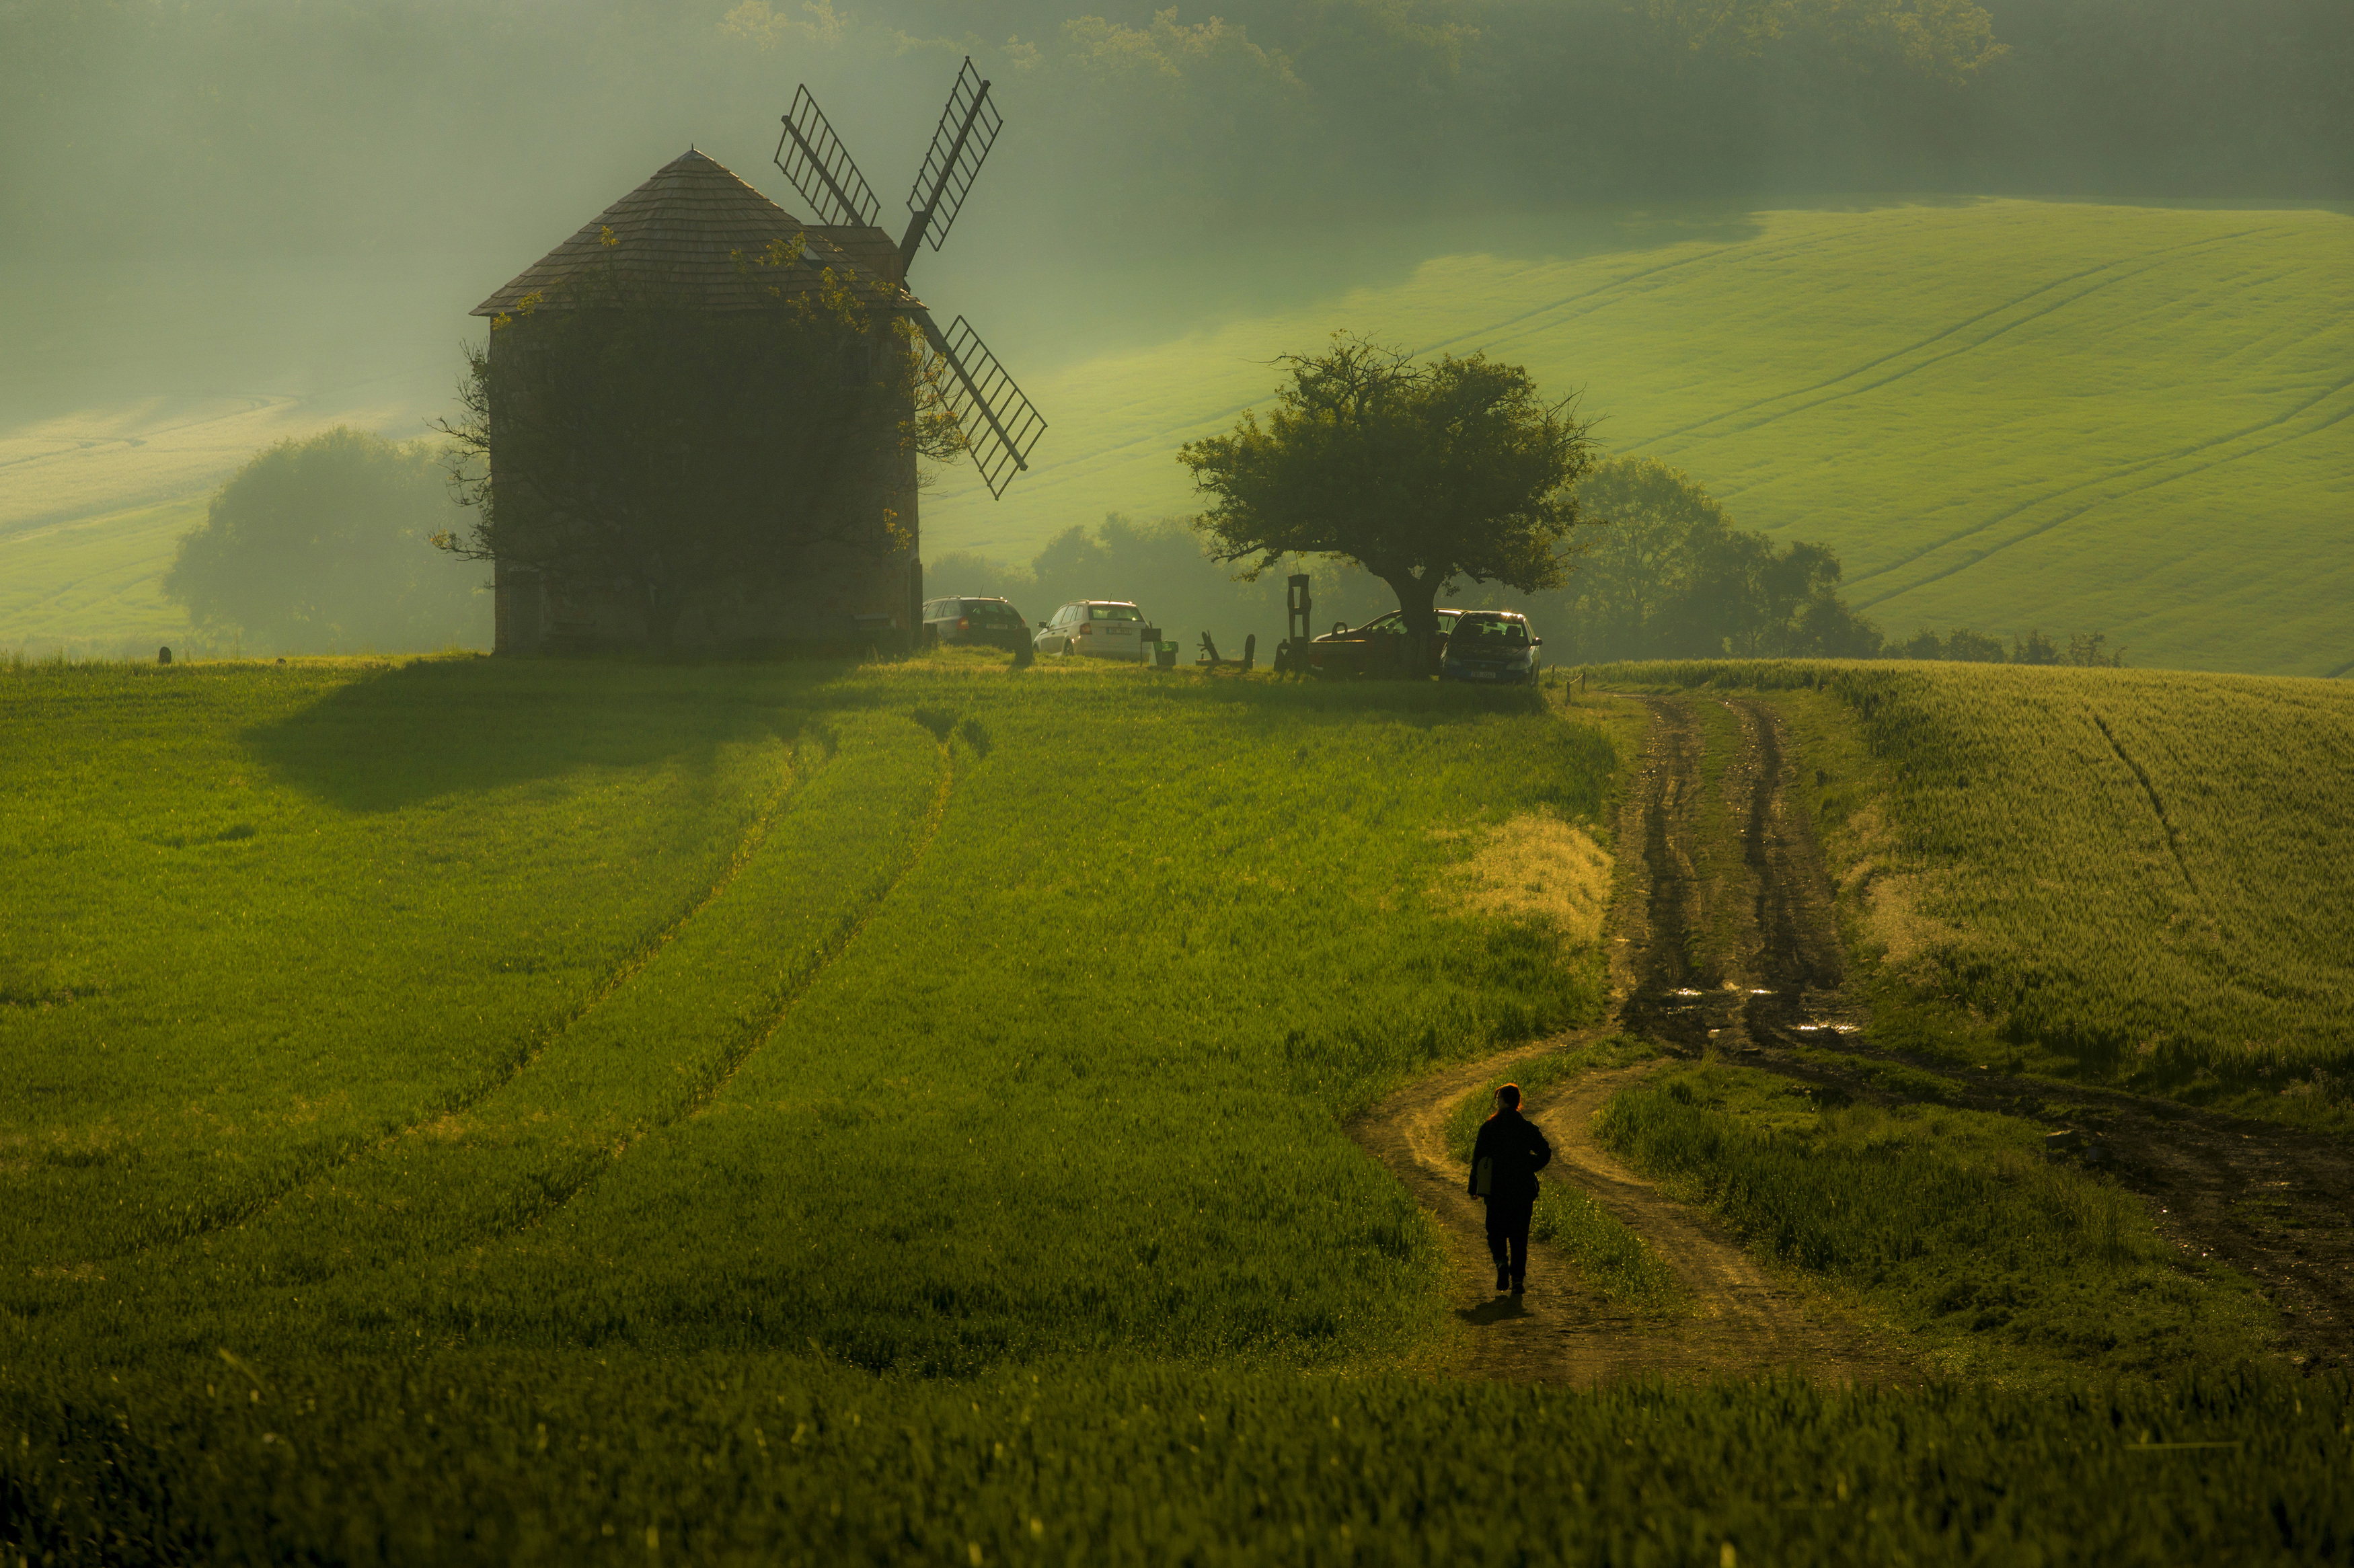  Agricultural, Field, Rural, Grass, Farm, Landscape, Moravske-Toskansko, Wildmill, Czech-Republic, Moravia, Sunrise, Damian Cyfka